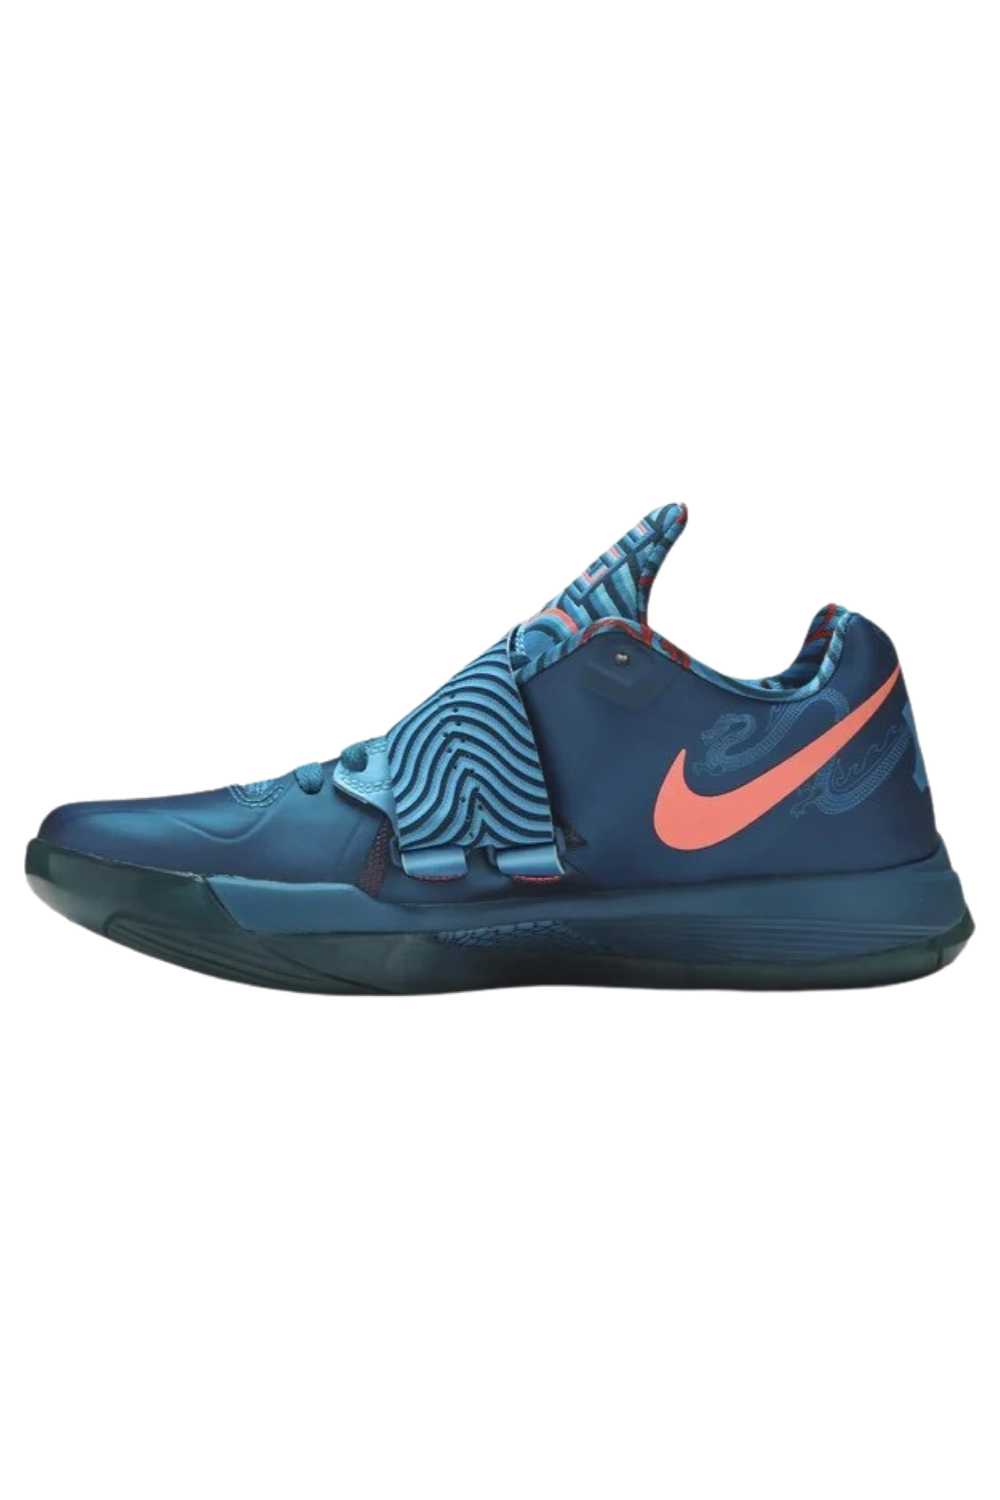 Nike KD4 YOTD (Size 12) - image 2